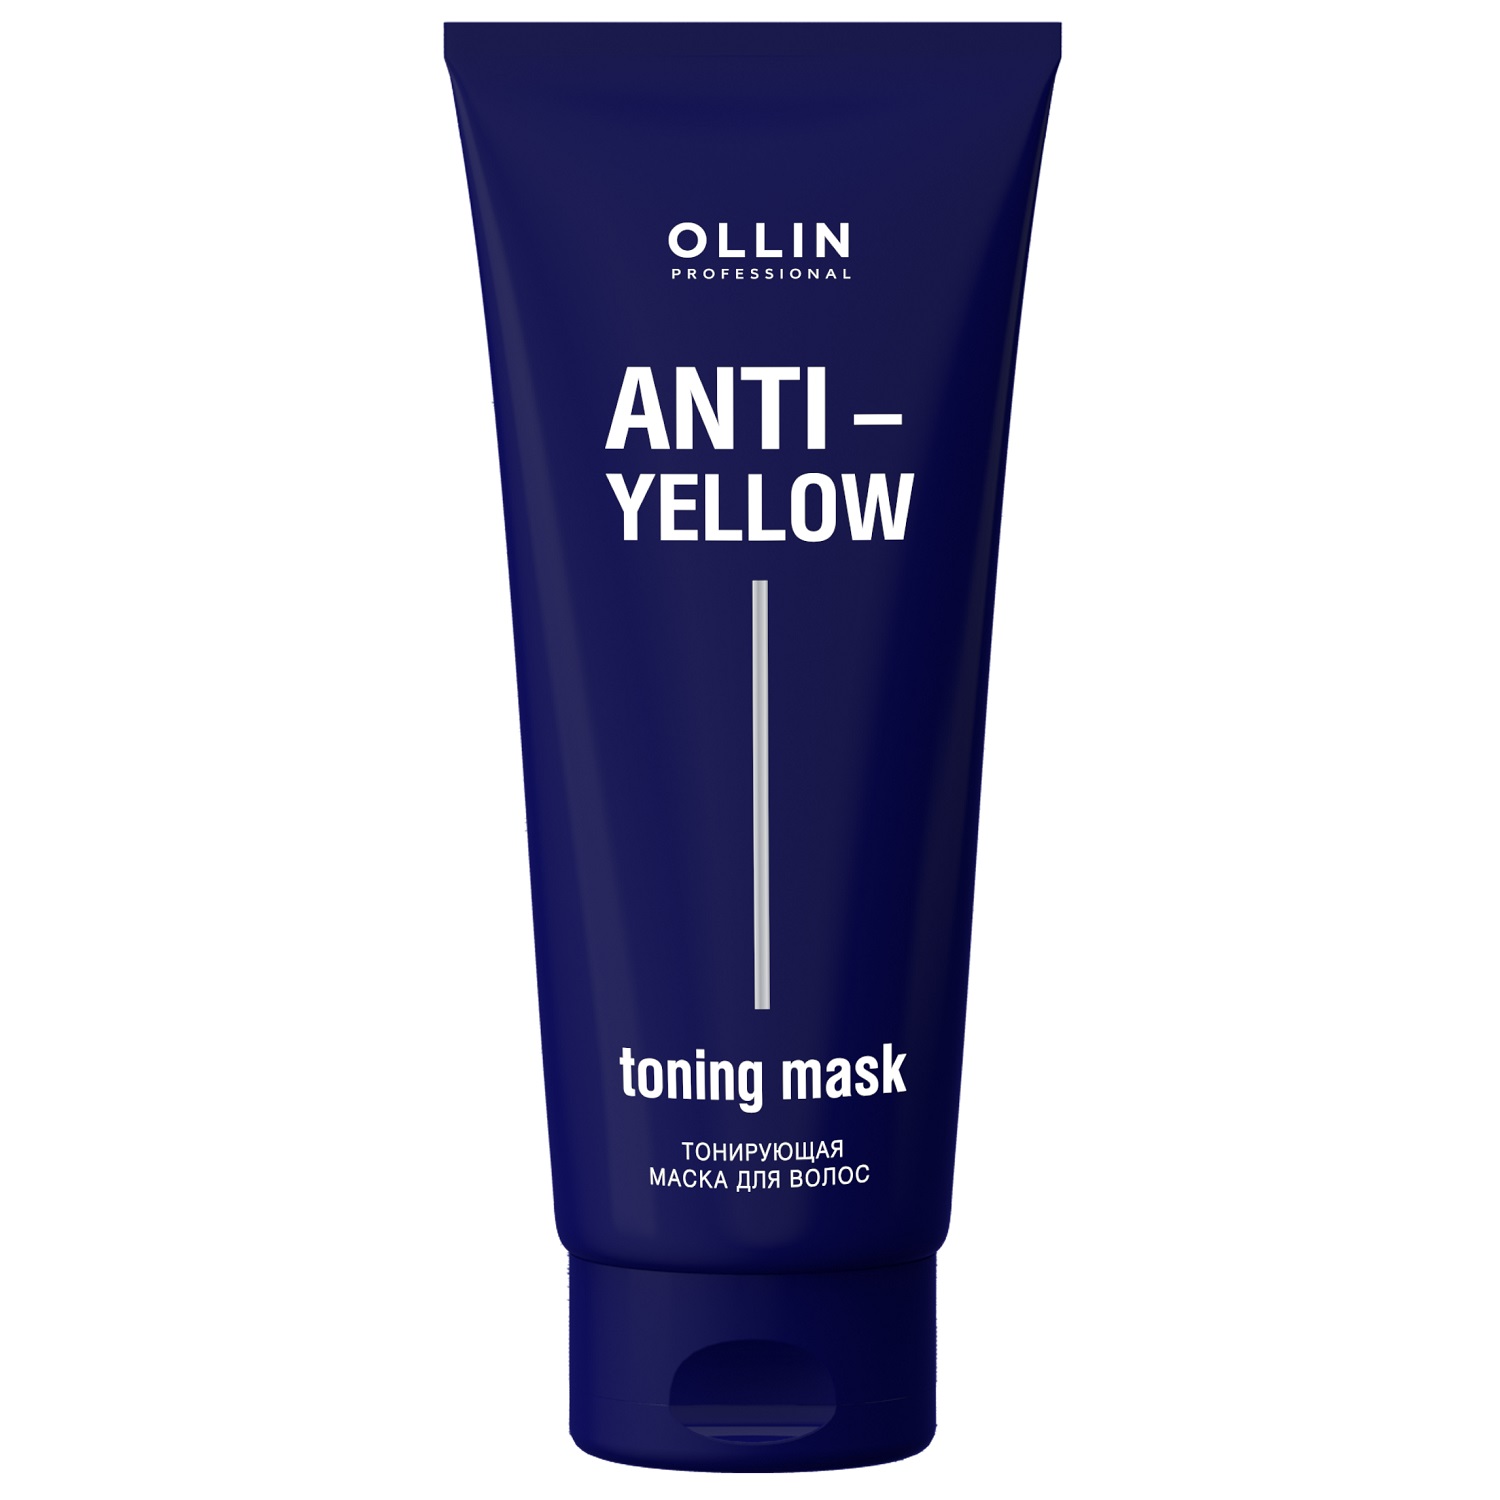 Ollin Professional Тонирующая маска для волос Toning Mask, 250 мл (Ollin Professional, Anti-Yellow)